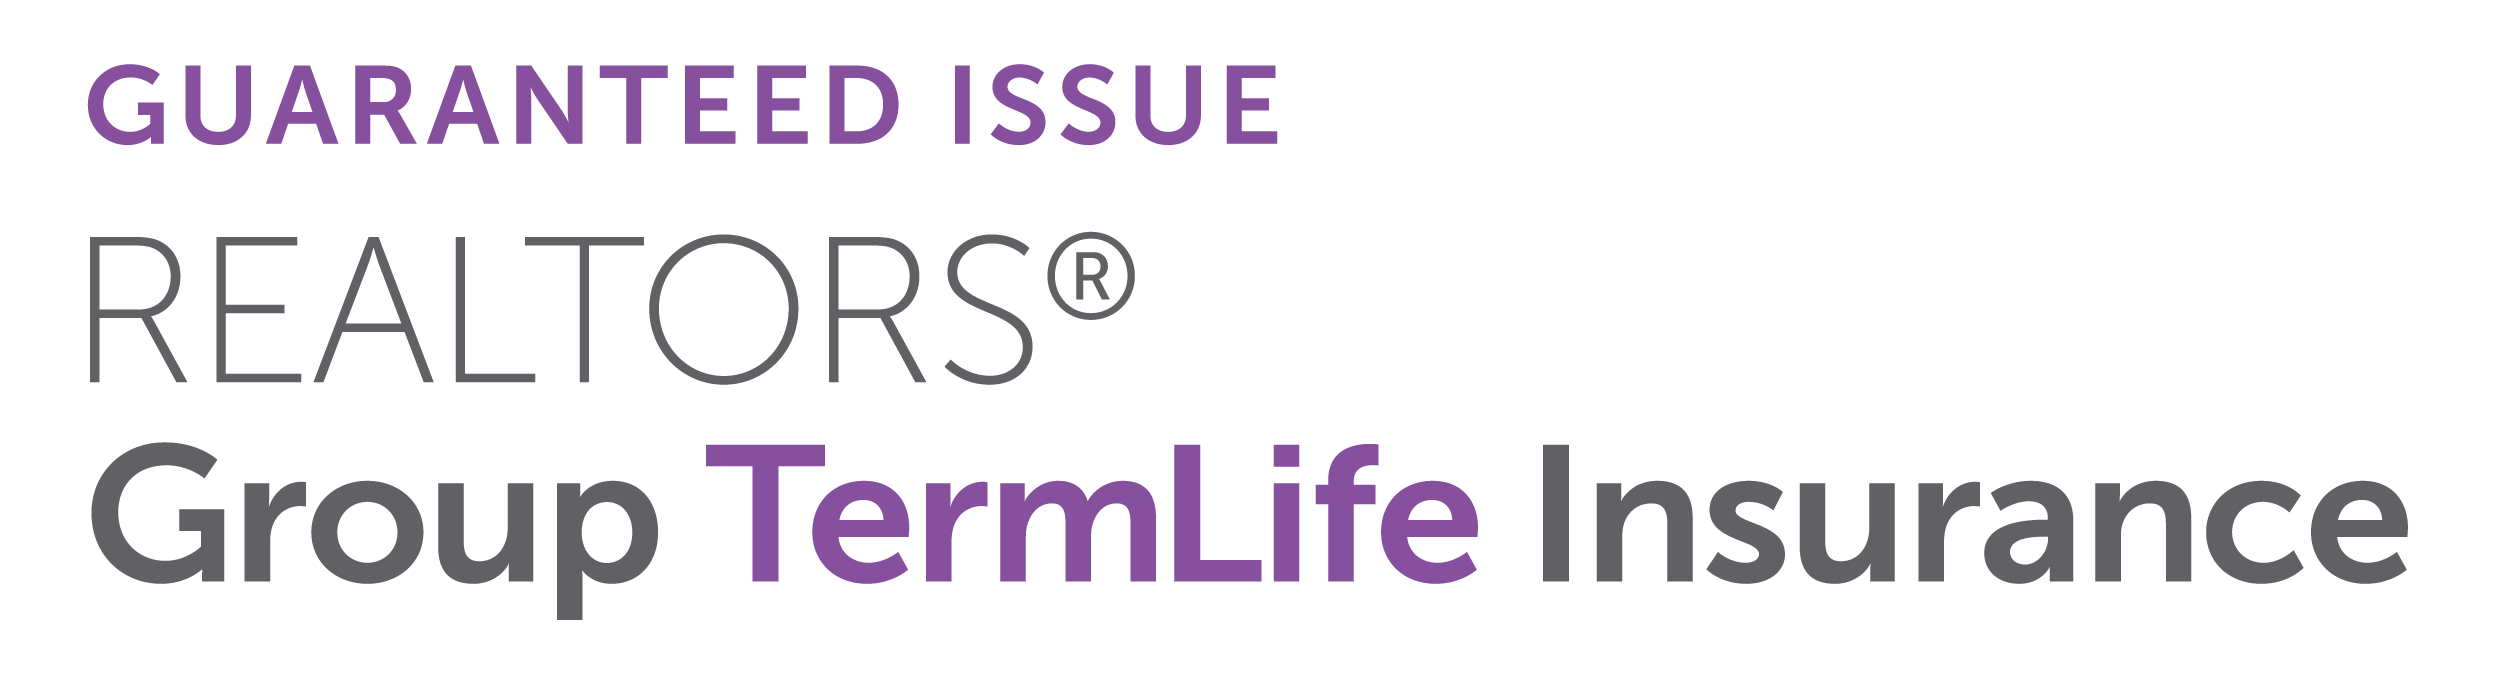 guaranteed issue life insurance for realtors logo